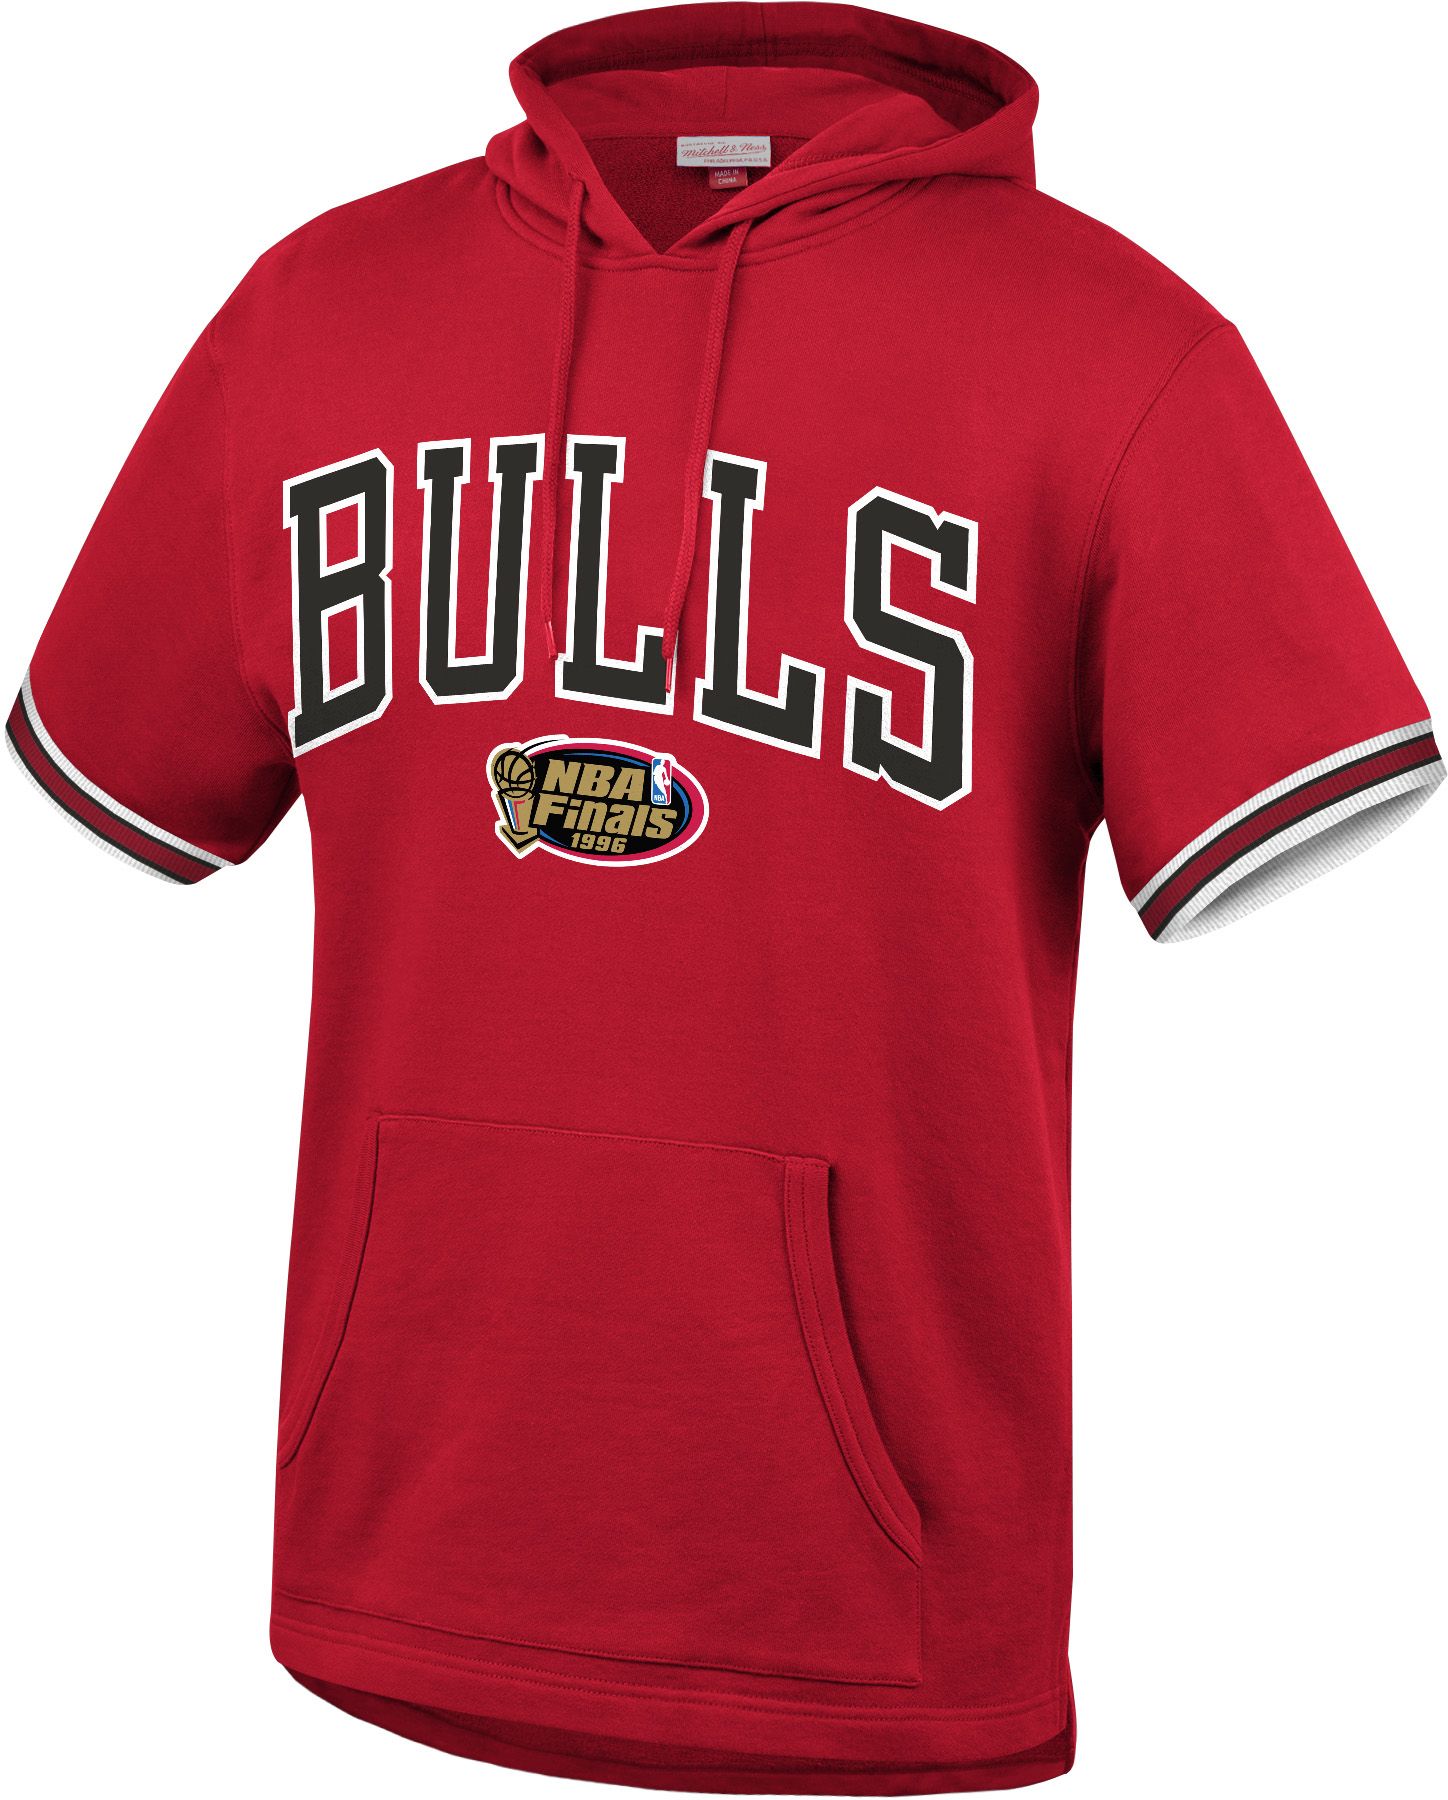 bulls short sleeve jersey